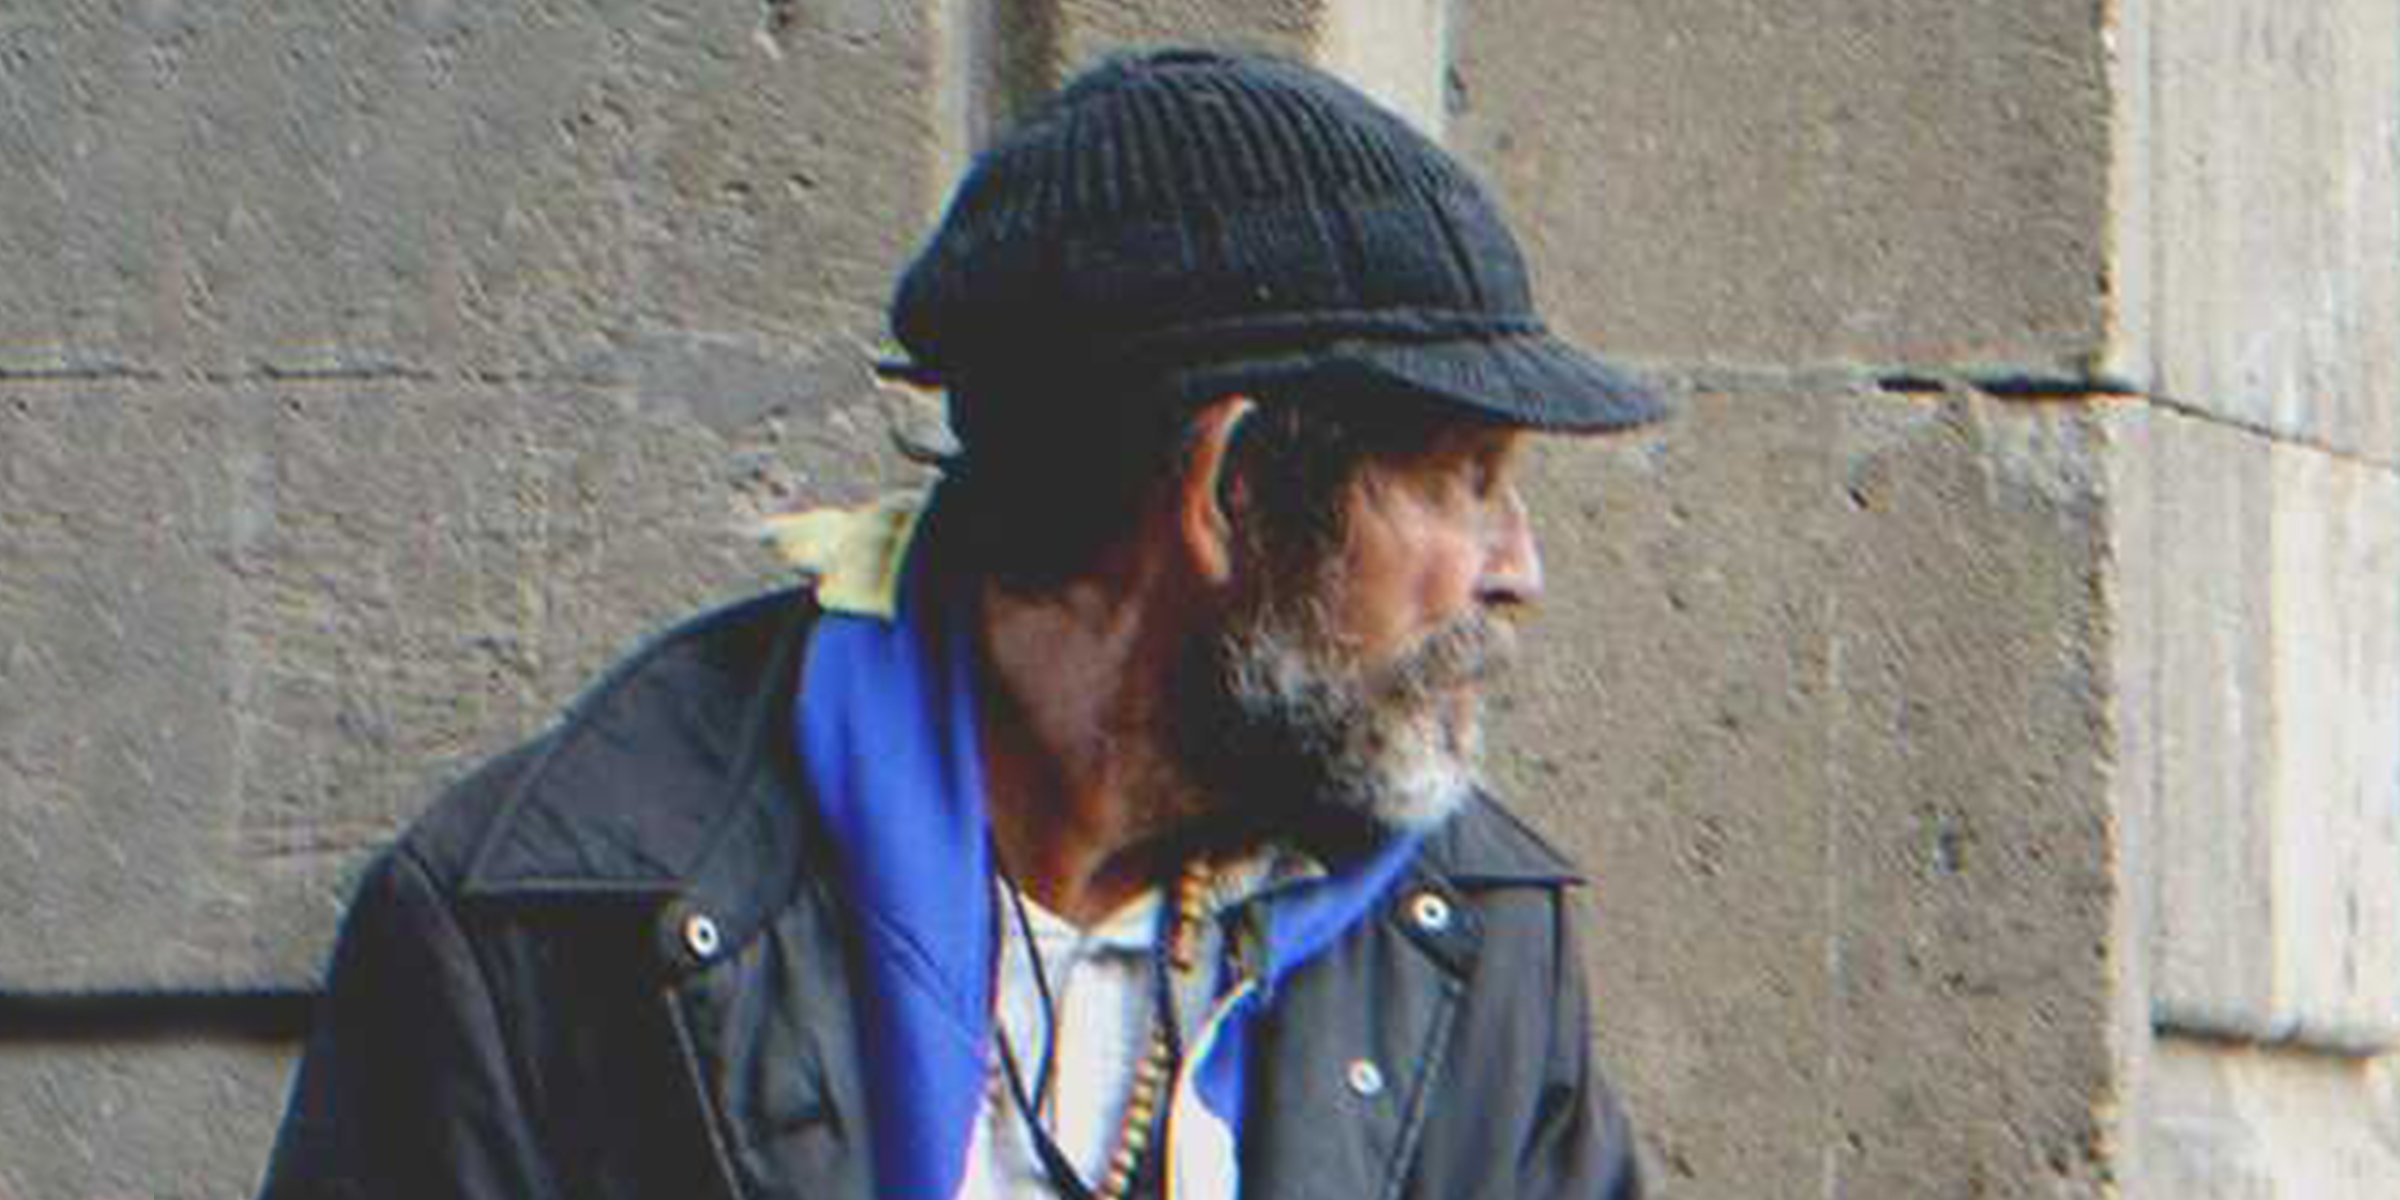 Un vieil homme | Flickr / Carl Campbell